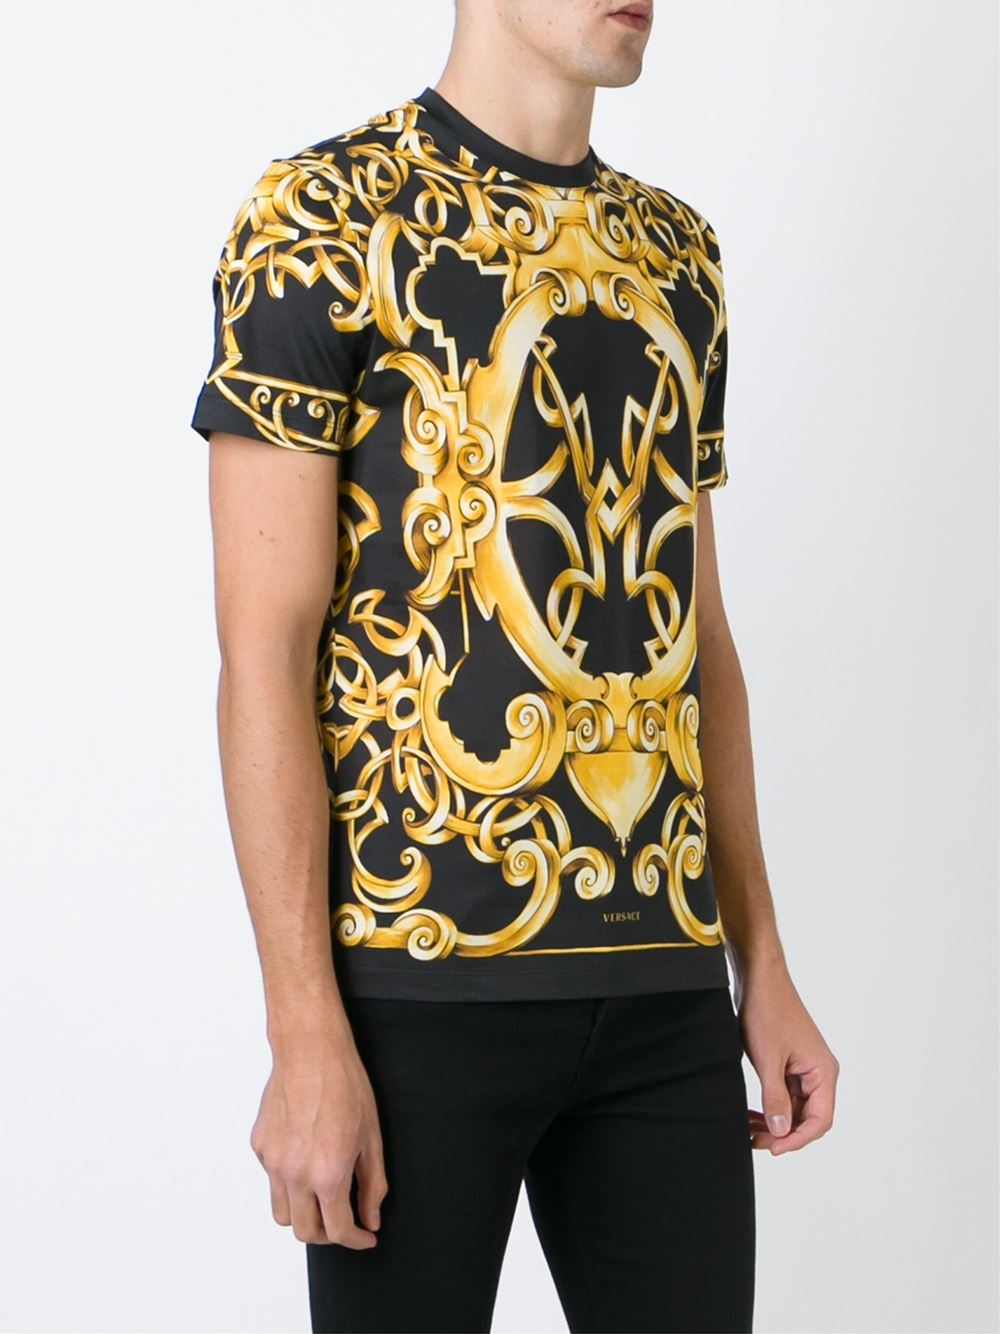 Lyst - Versace Baroque Print T-shirt in Black for Men